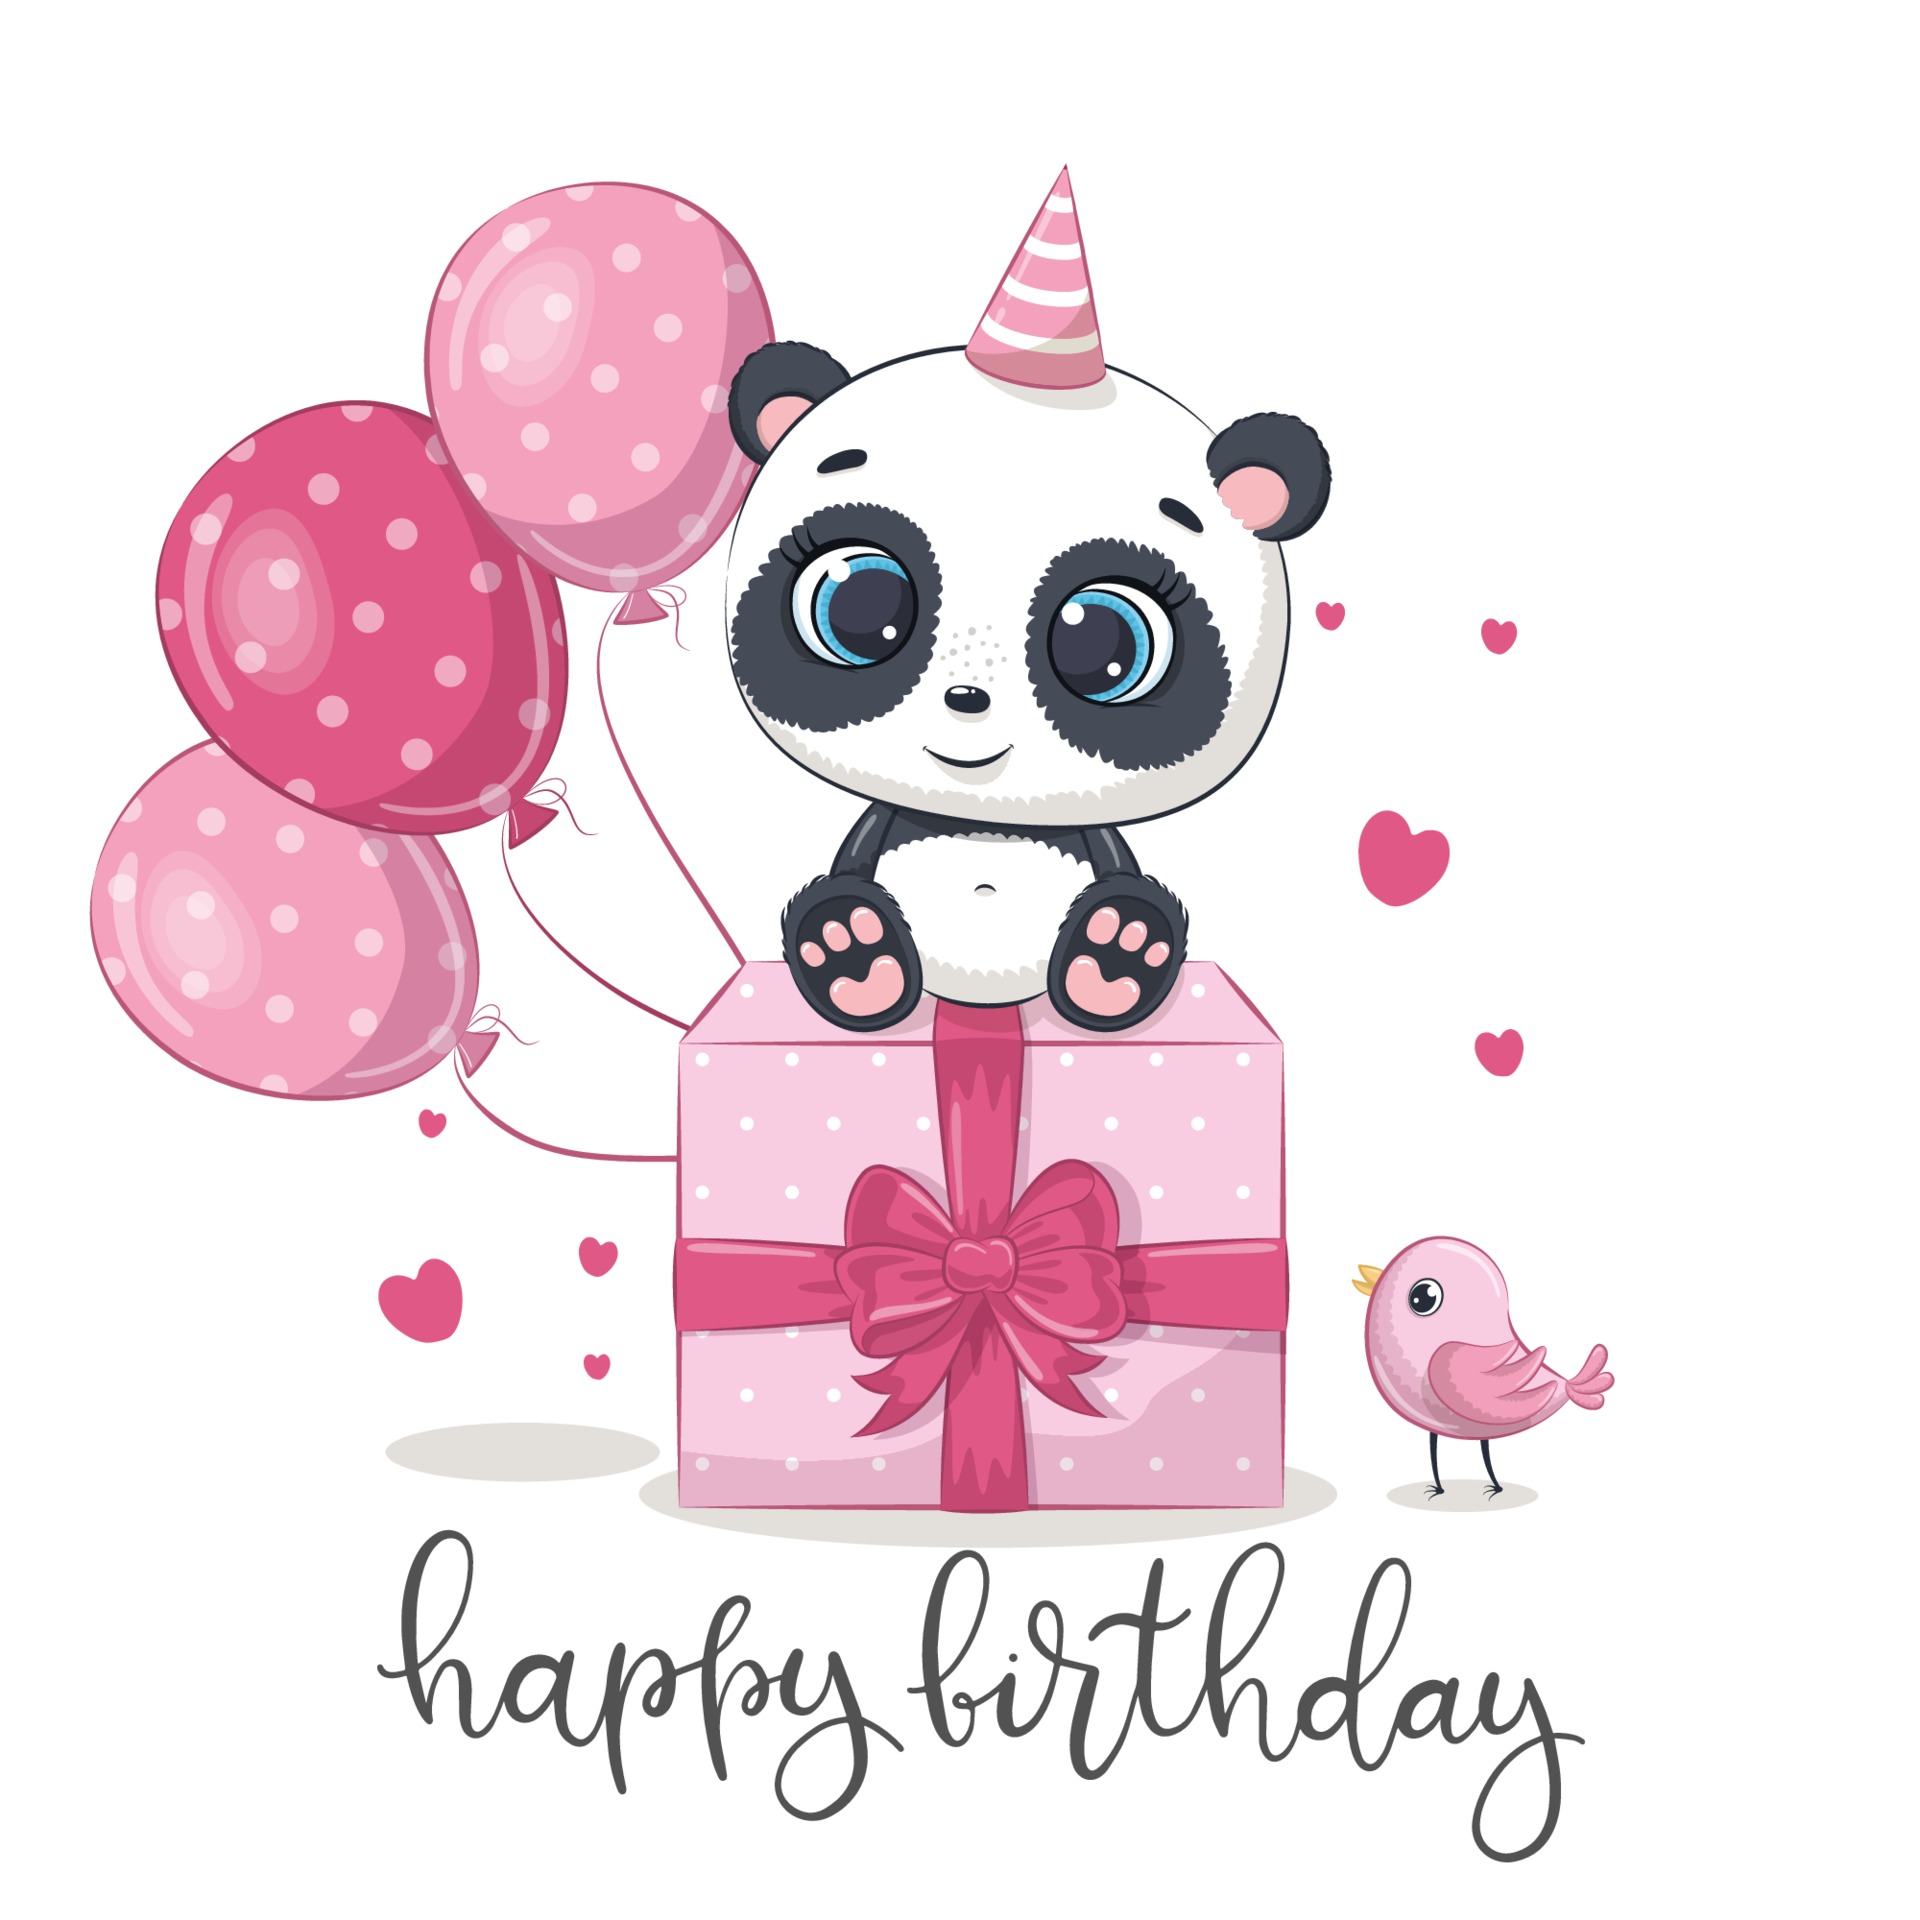 Happy Birthday Greeting Card With Panda Vector Cartoon Illustration